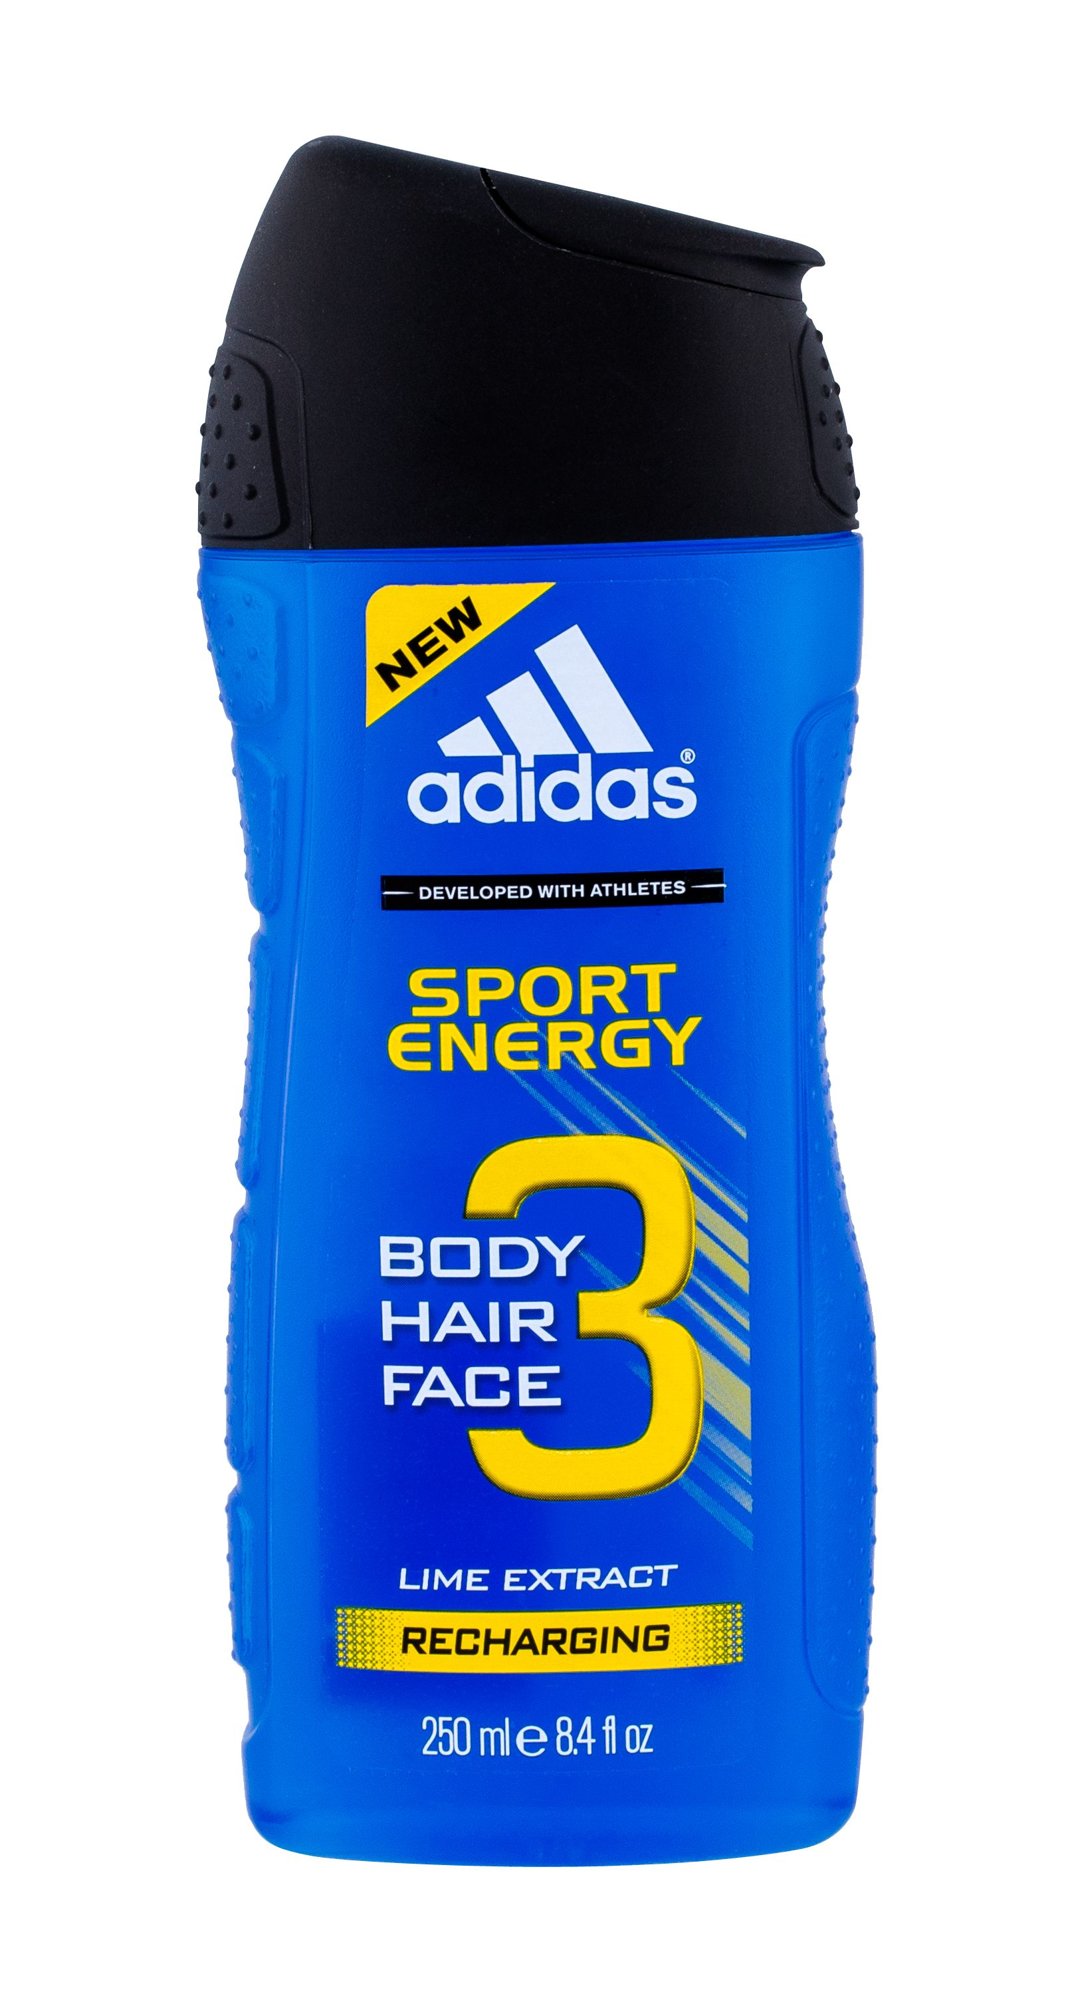 Adidas 3in1 Sport Energy